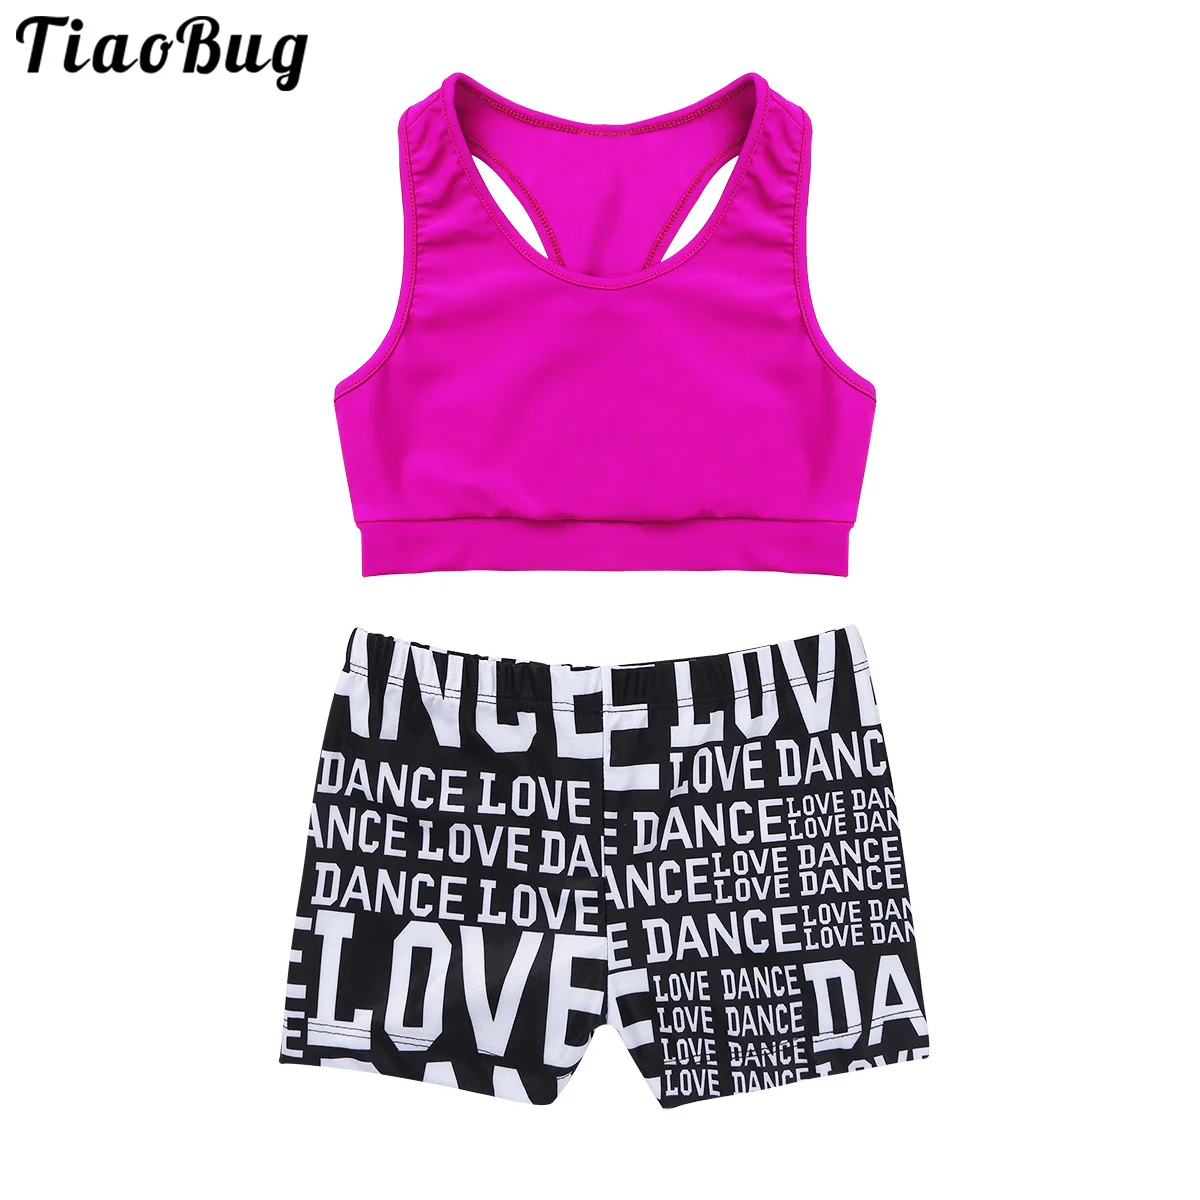 

TiaoBug Summer 2Pcs Kid Girls Swimsuit Bikini Tankini Outfit Tank Top With Letters Floral Printed Bottoms Set Swimwear Beachwear